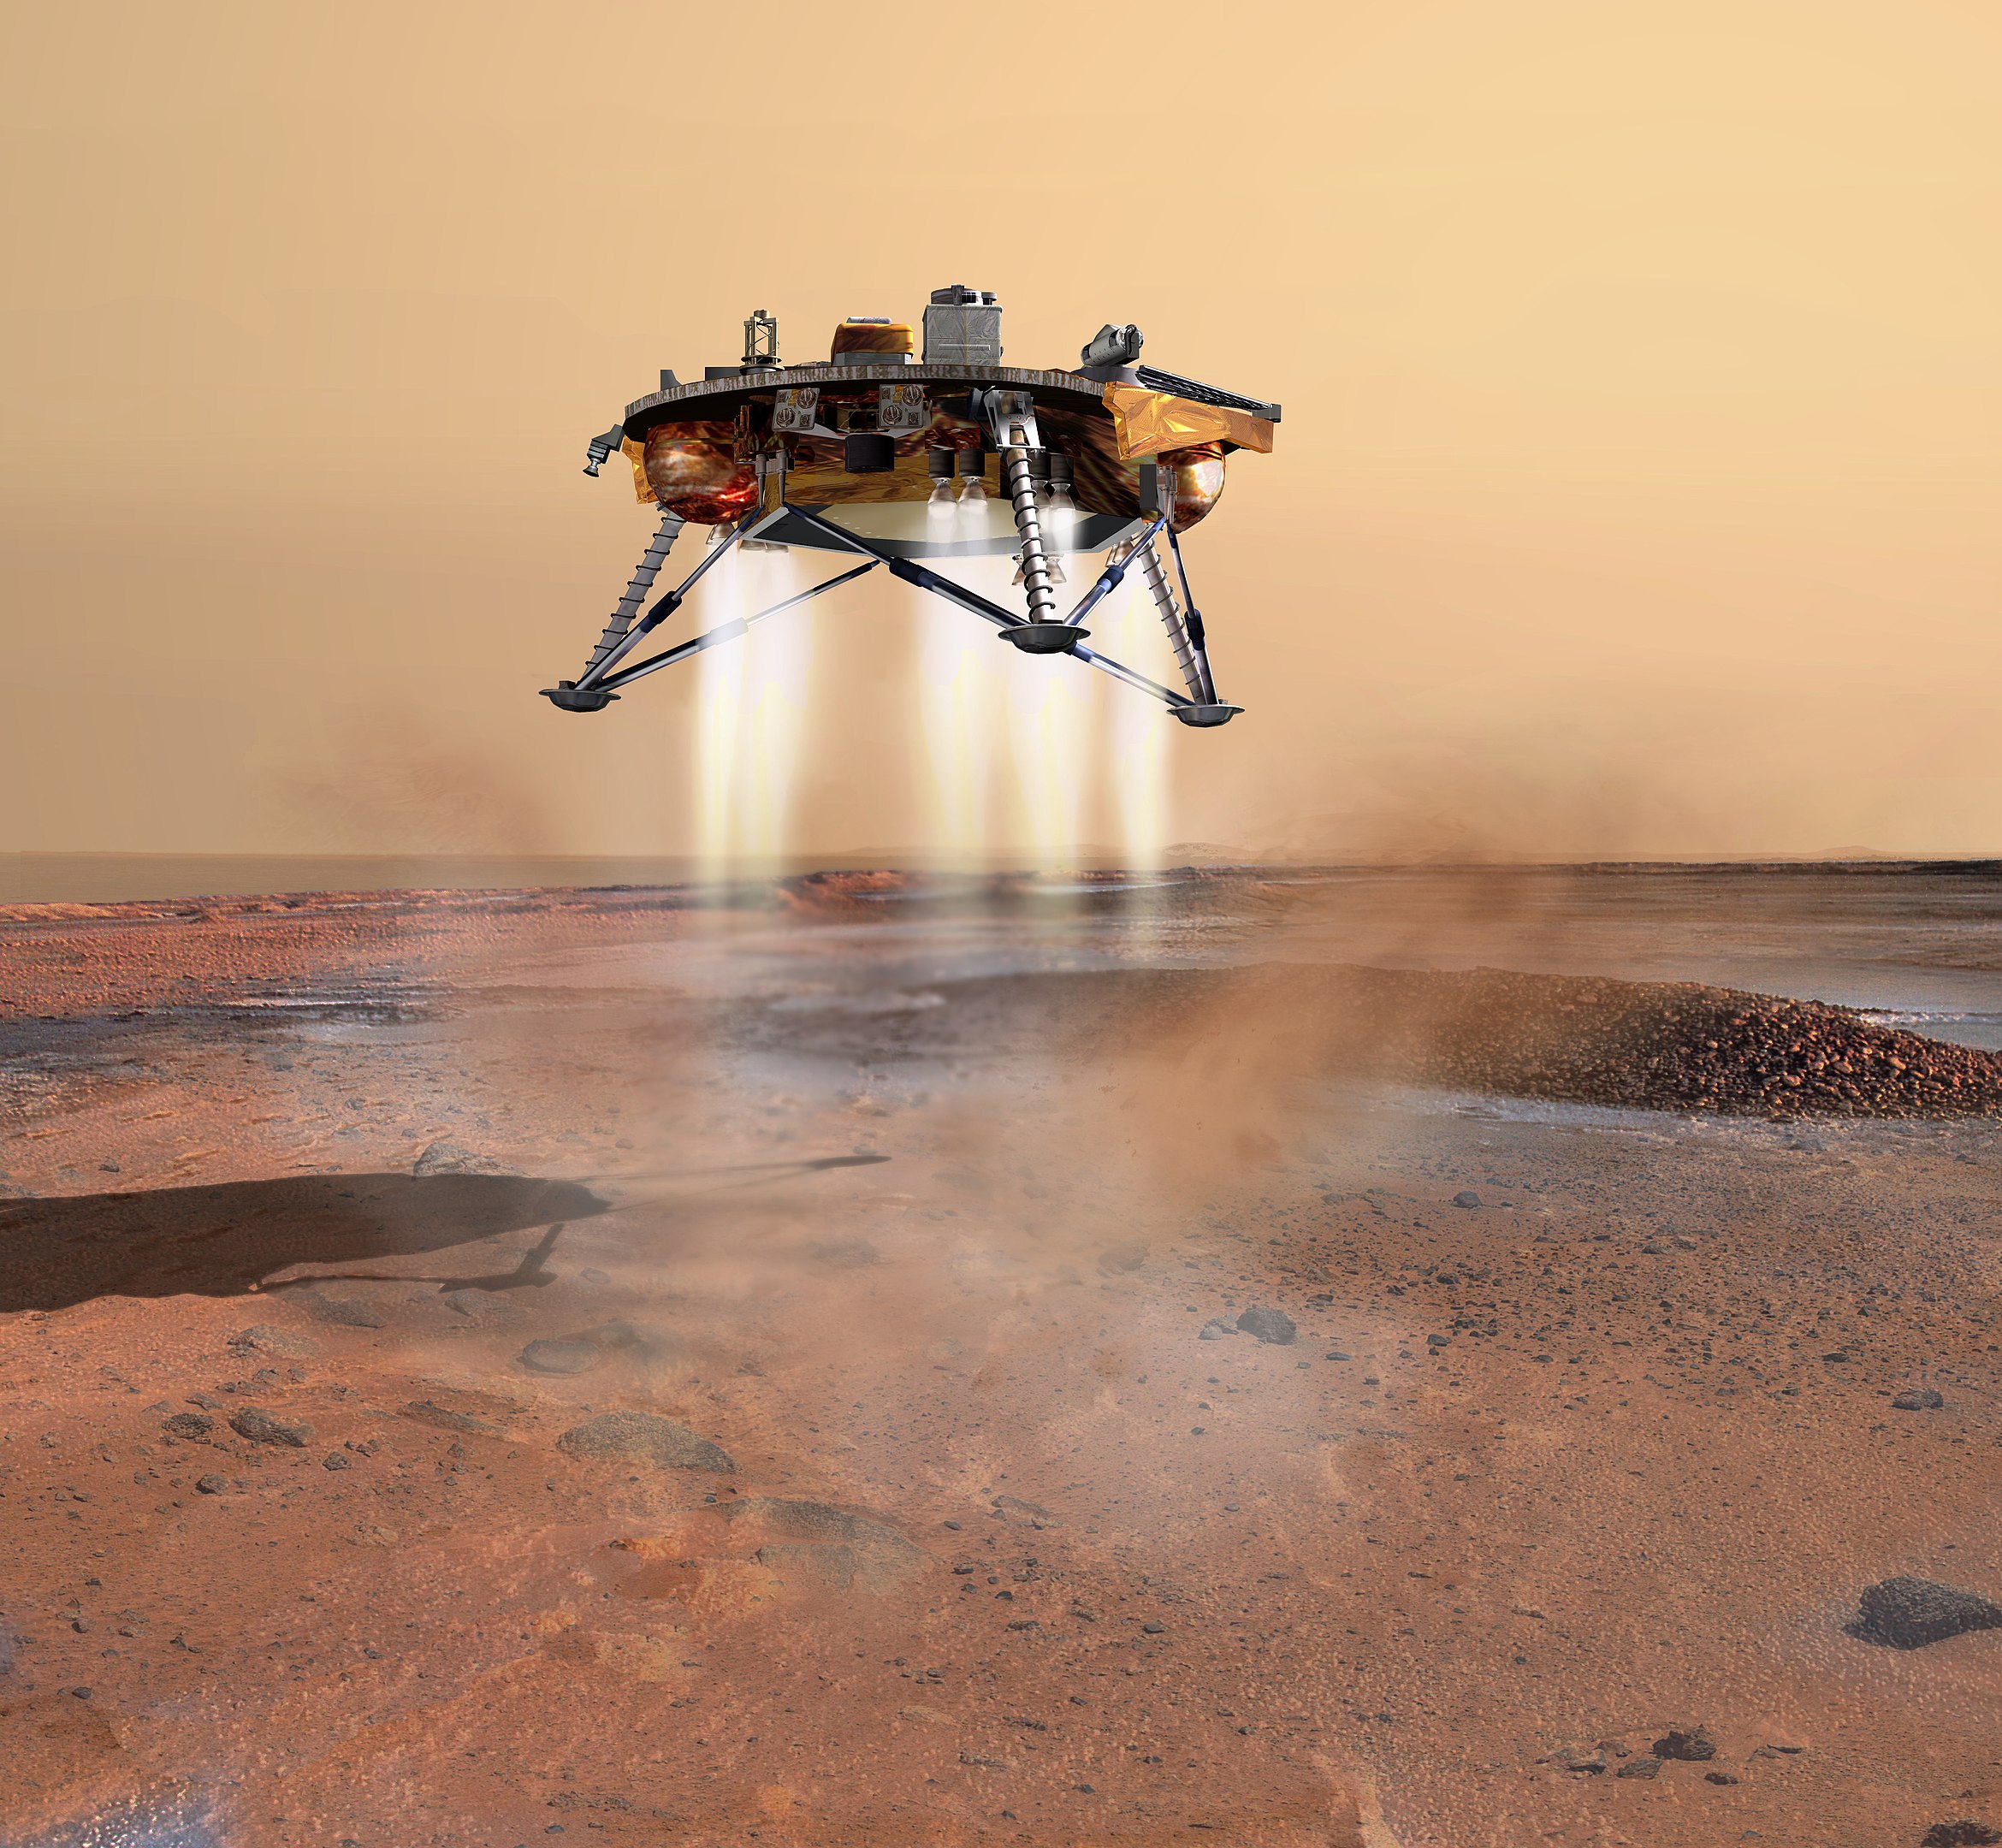 30 de julio de 2008 La sonda Phoenix de la NASA encontraba agua en el planeta Marte